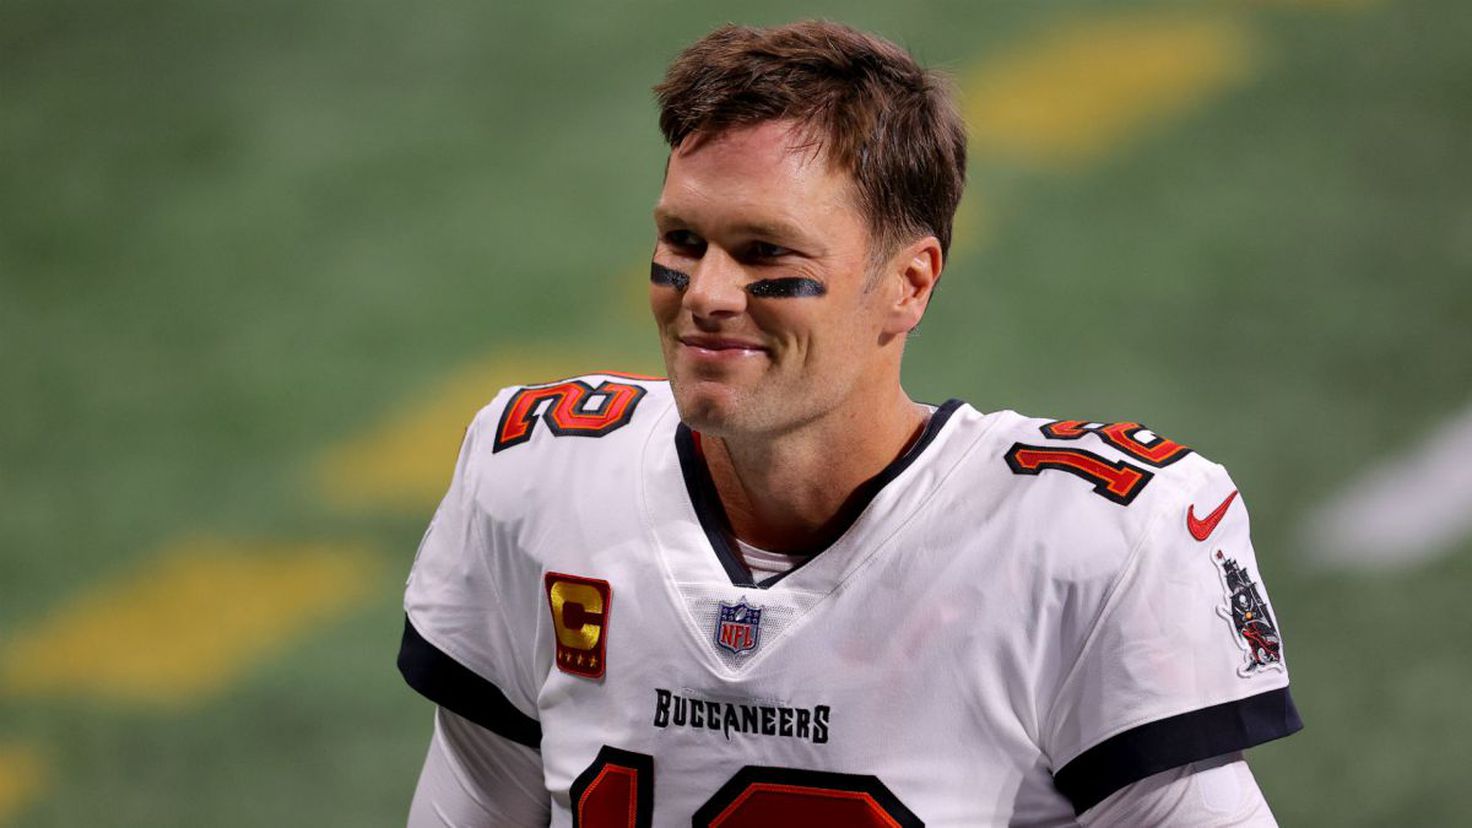 Tom Brady will help NFL with gambling problem
